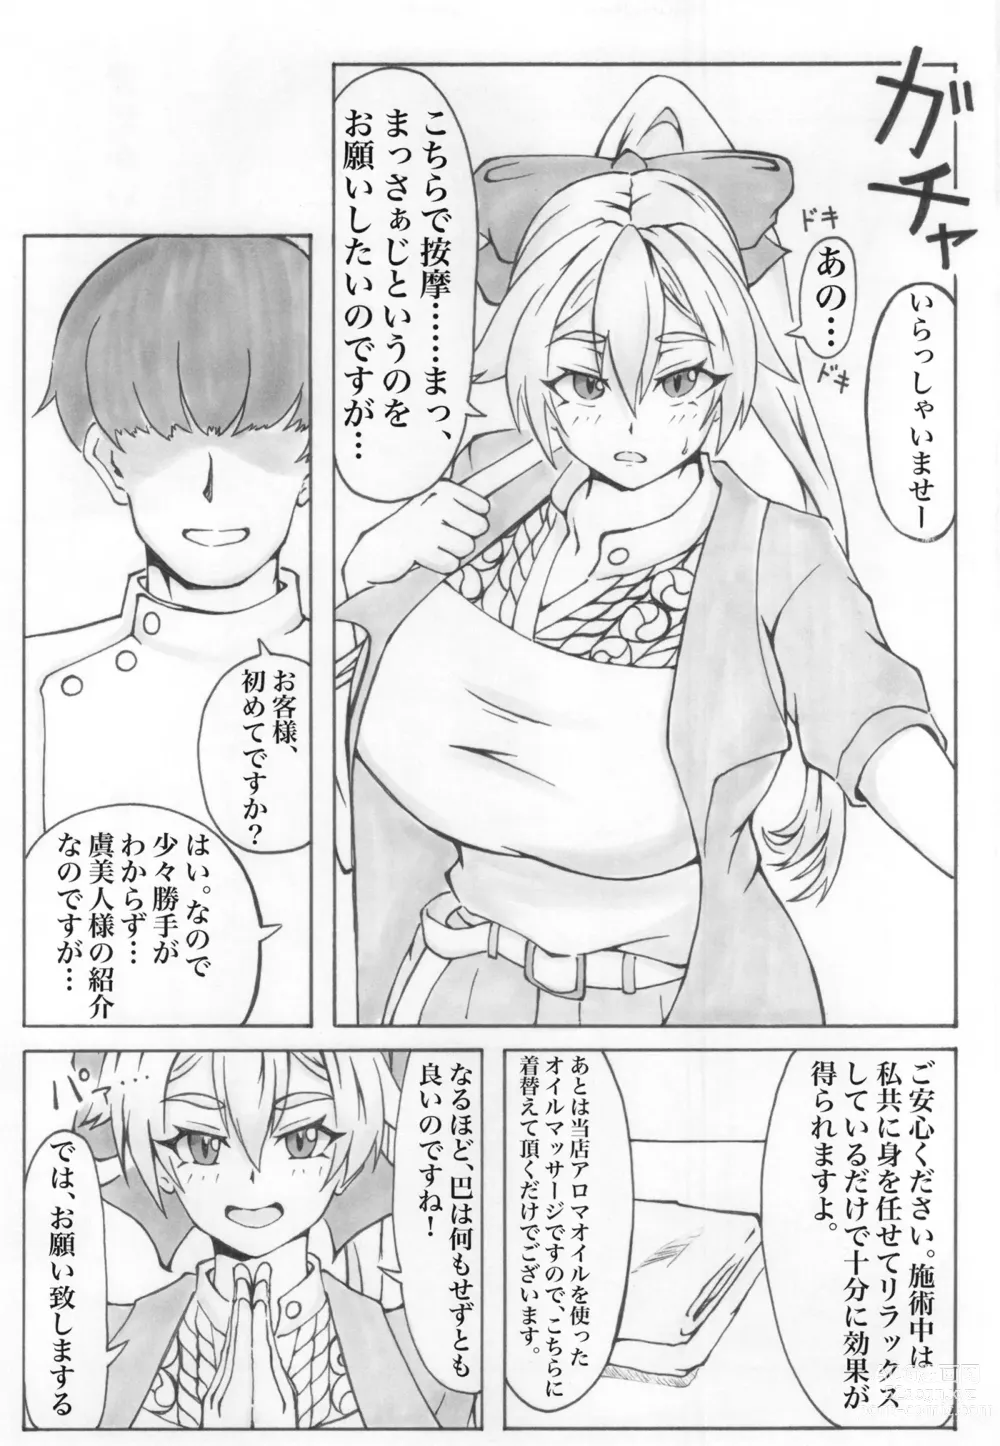 Page 7 of doujinshi Tomoe detokkusu